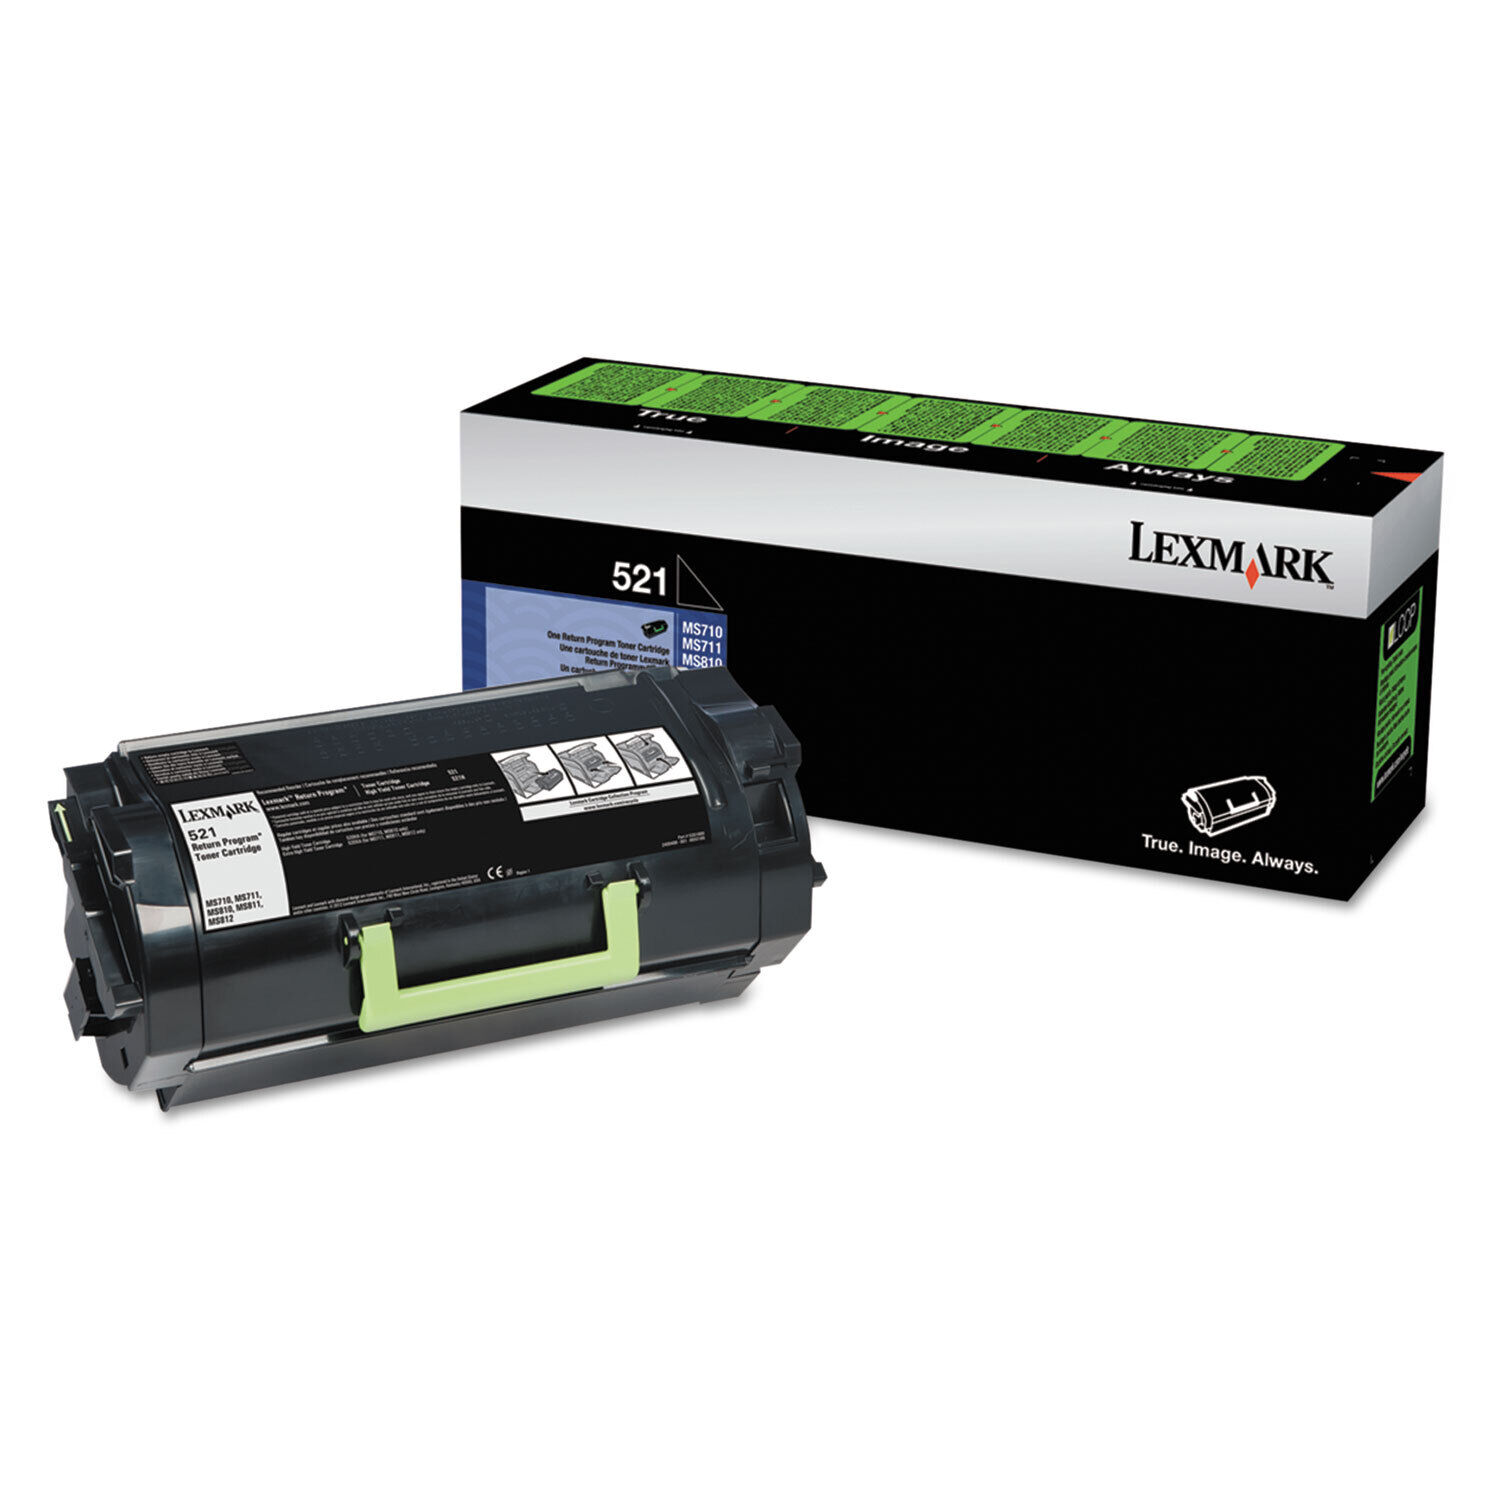 Lexmark 52D1000 (LEX-521) Toner 6000 Page-Yield Black